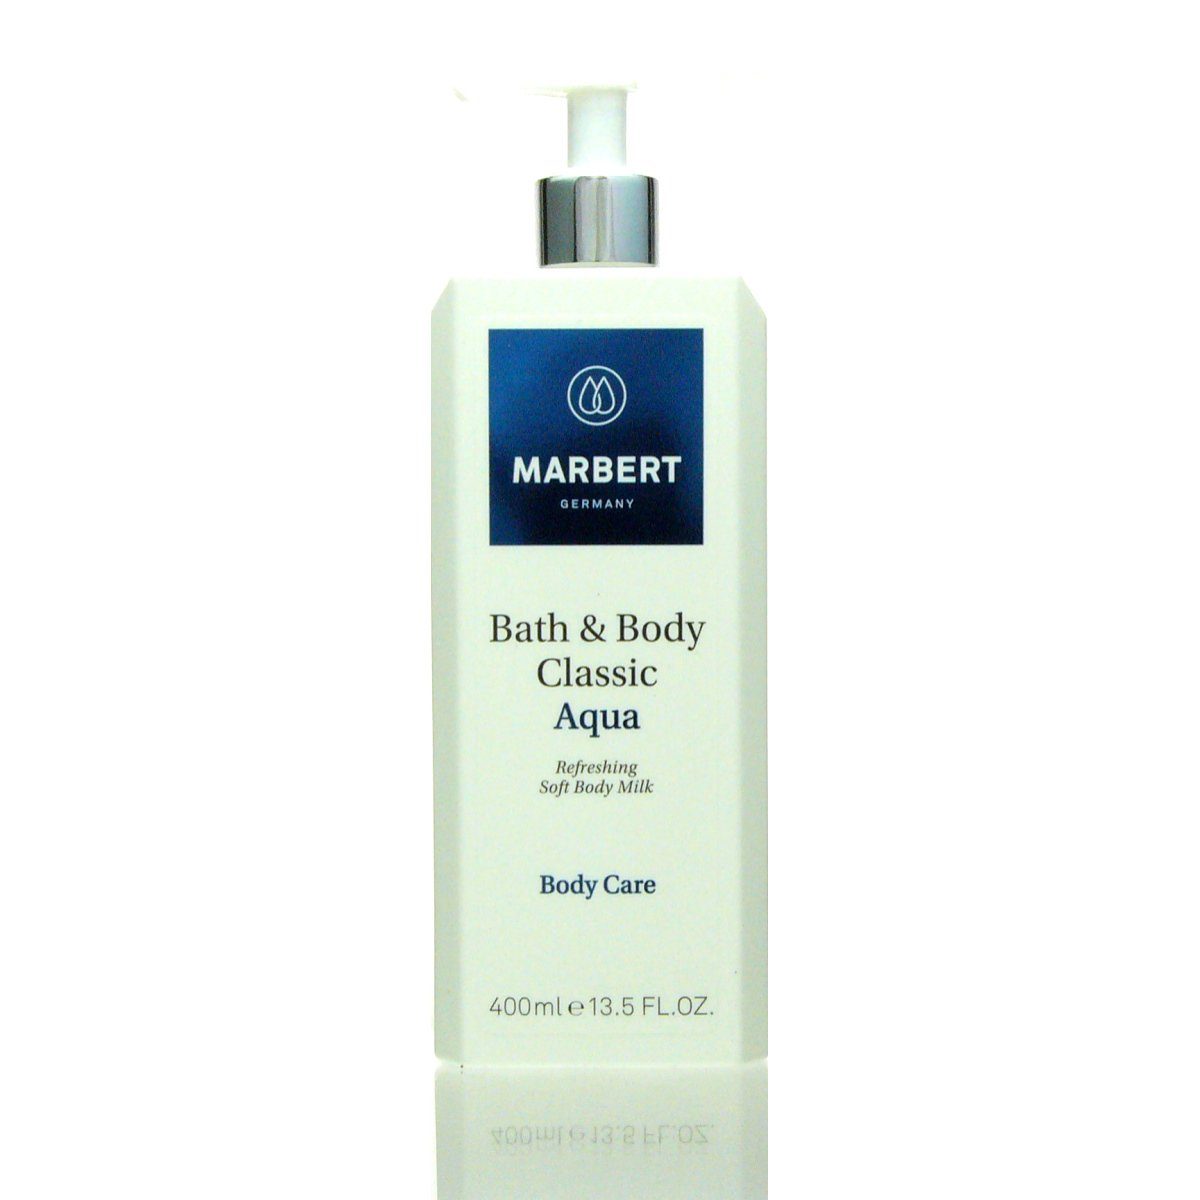 & Bath duftende ml, zitrisch-aquatisch Classic Aqua Marbert Bodymilk 400 Body Körpermilch Bodylotion Marbert